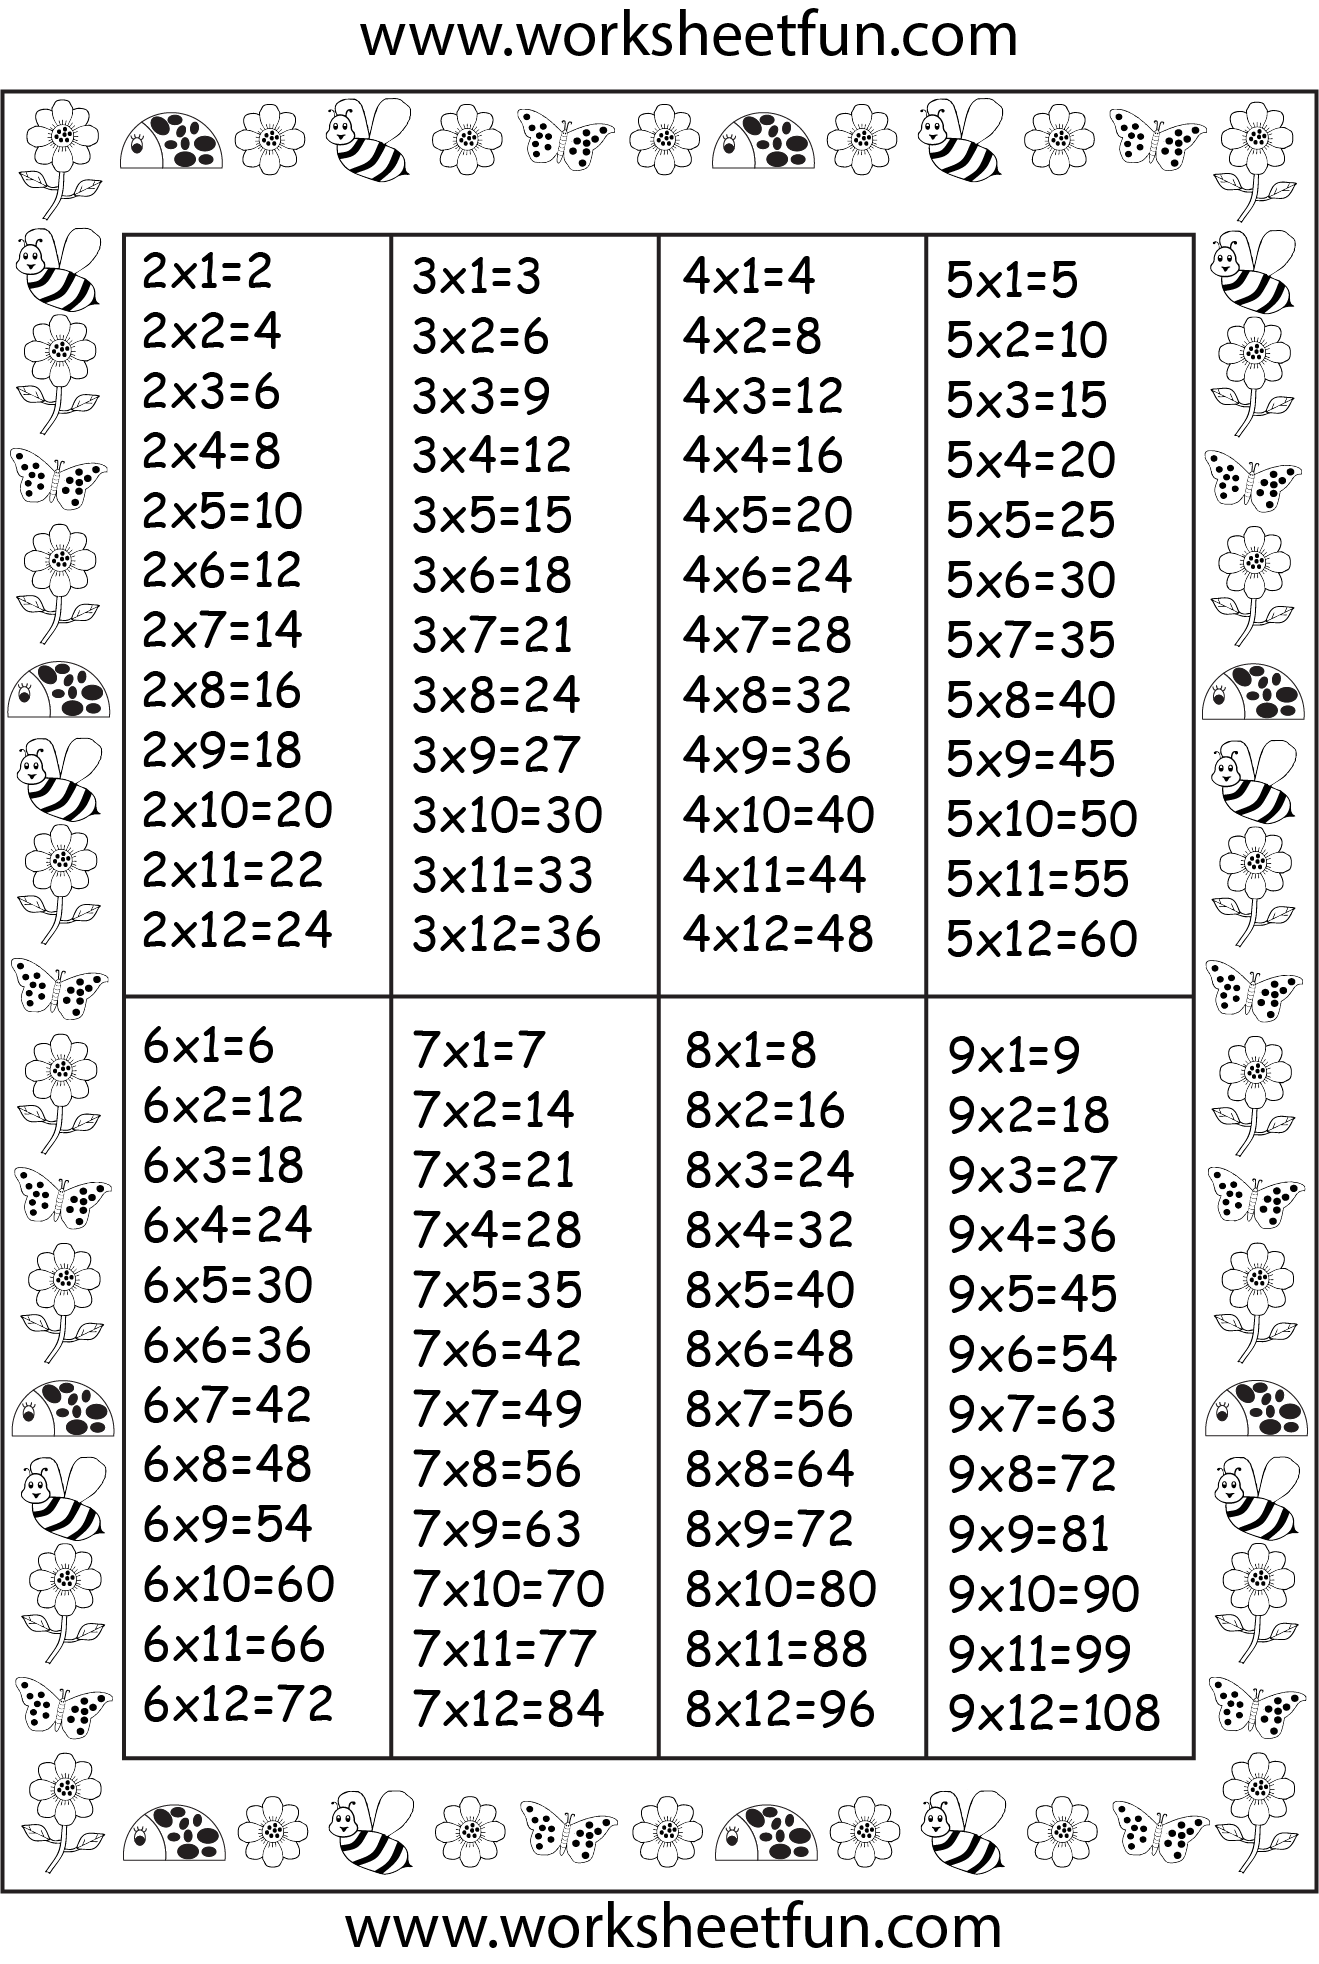 times-table-chart-2-3-4-5-6-7-8-9-free-printable-worksheets-worksheetfun